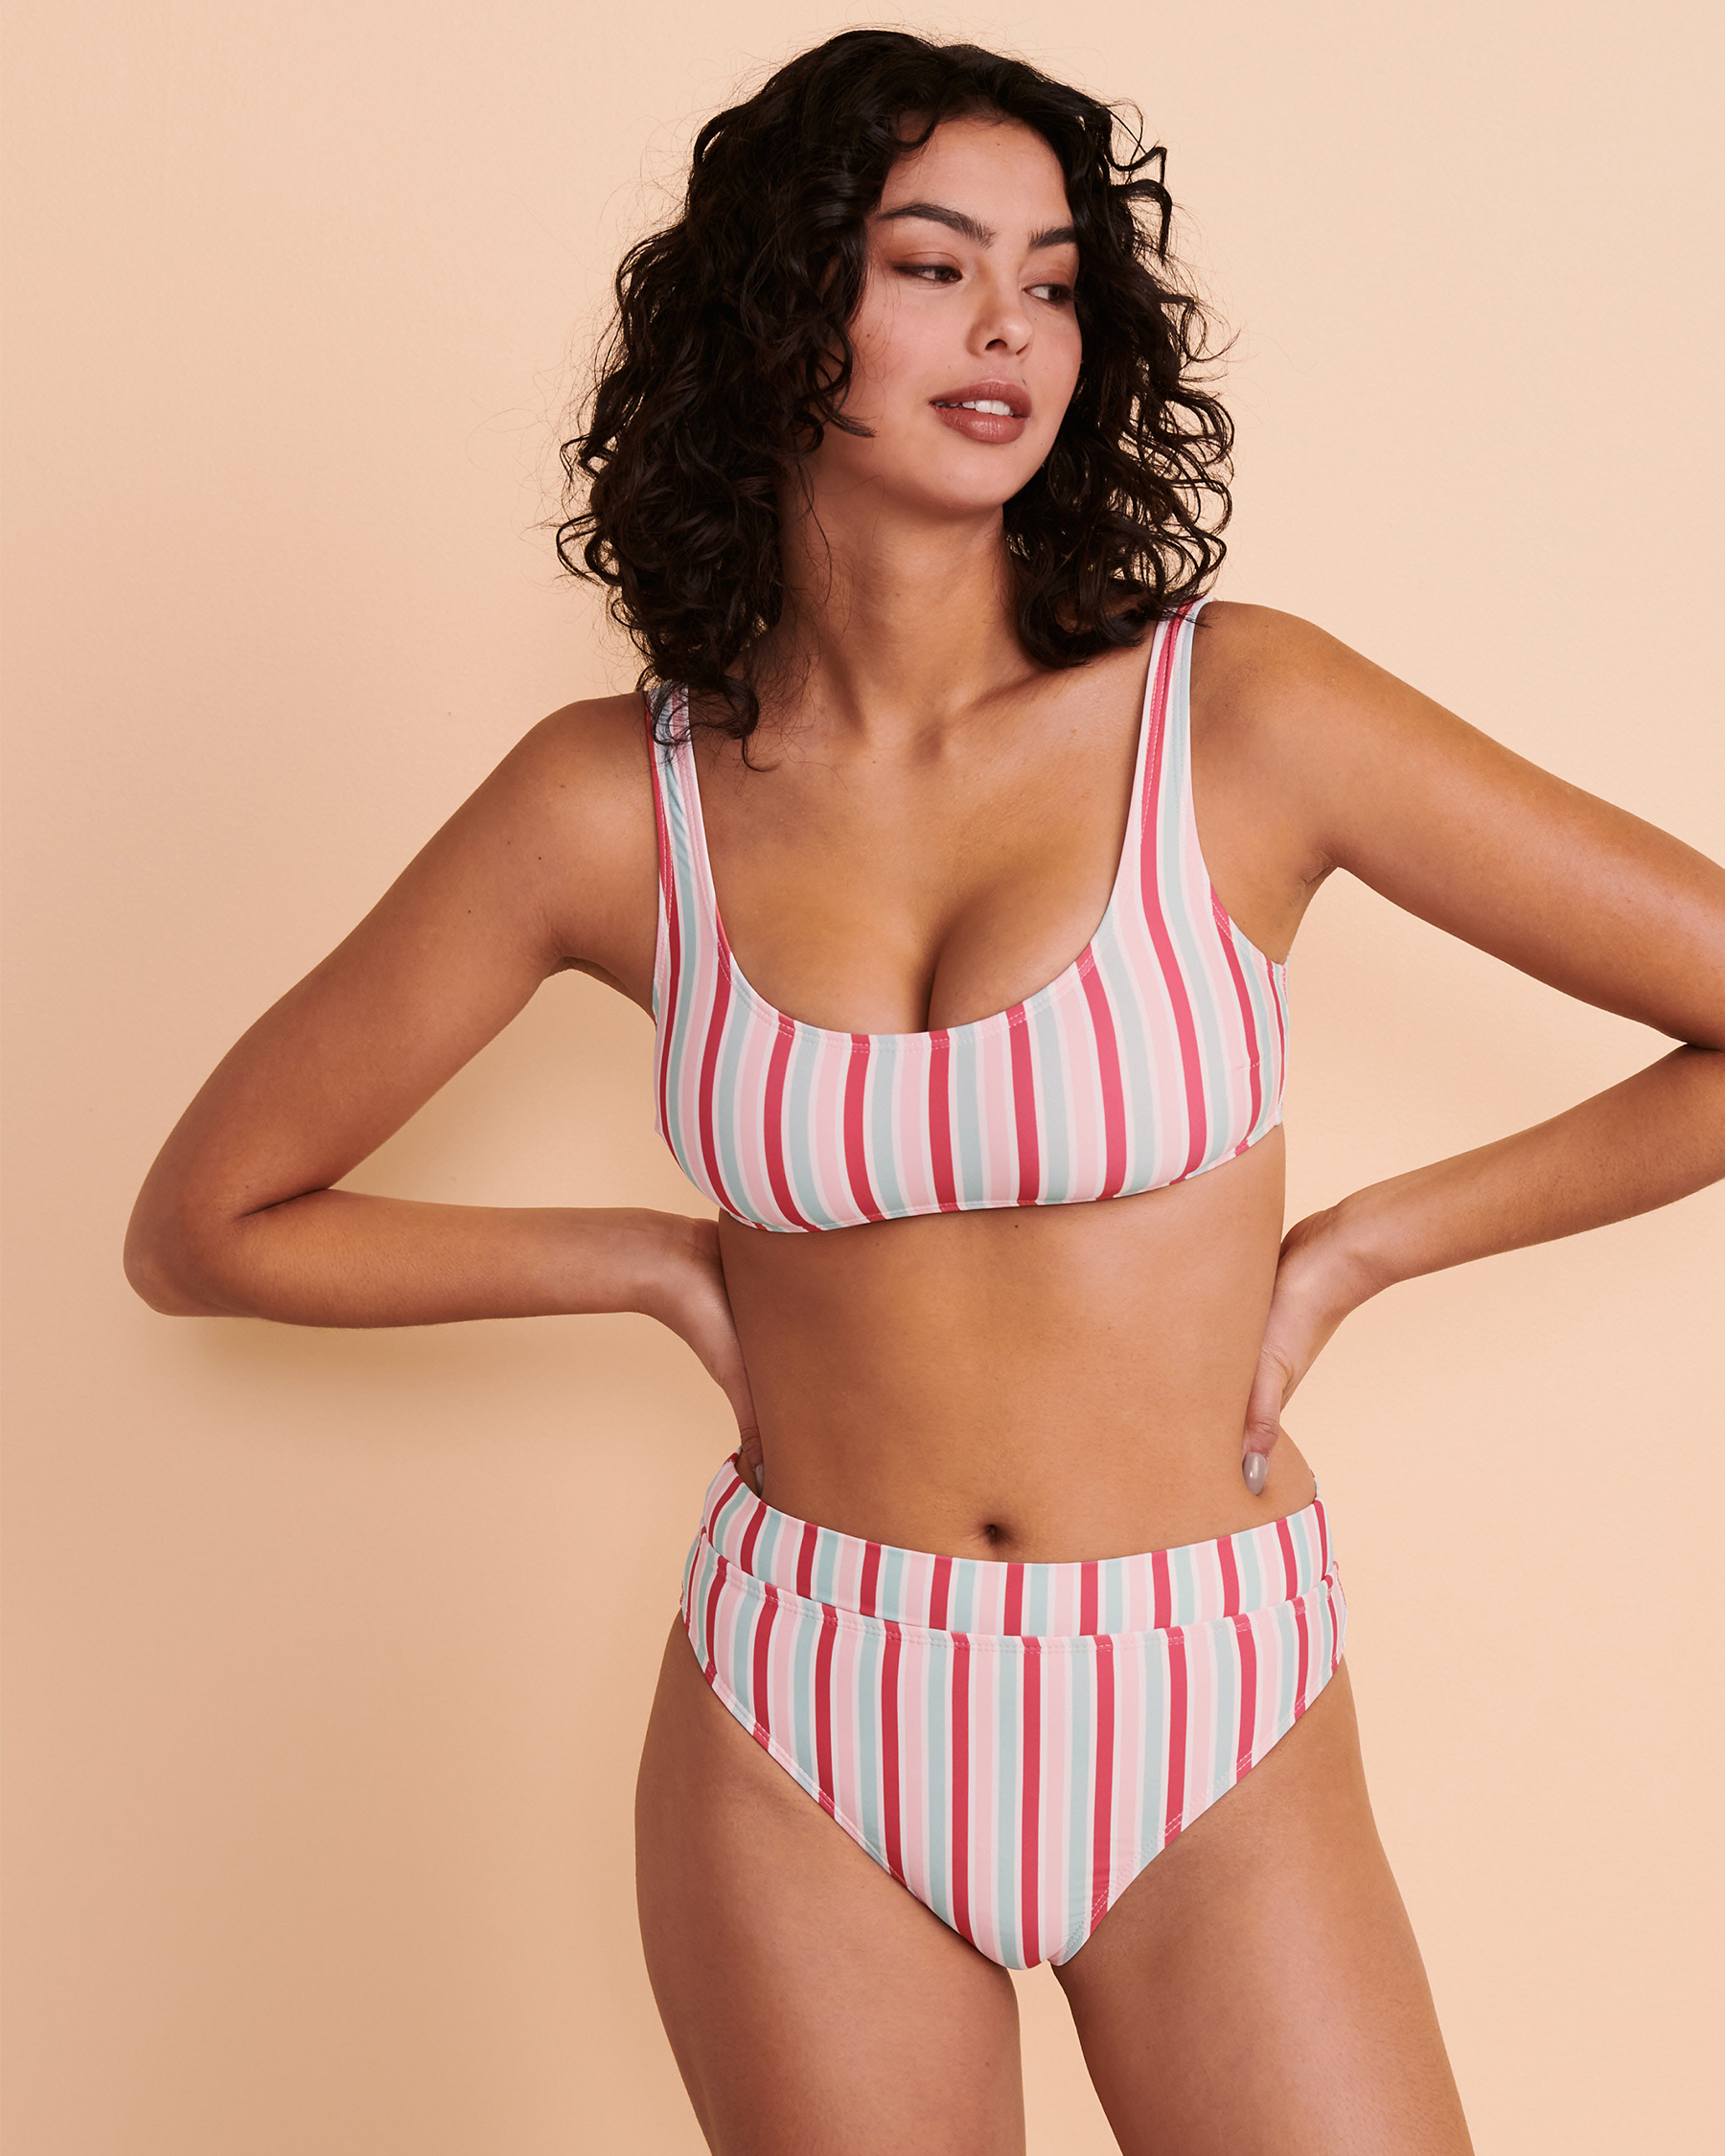 NANA PALM SPRINGS Genevieve High Waist Bikini Bottom Candy stripes NZ119 - View5